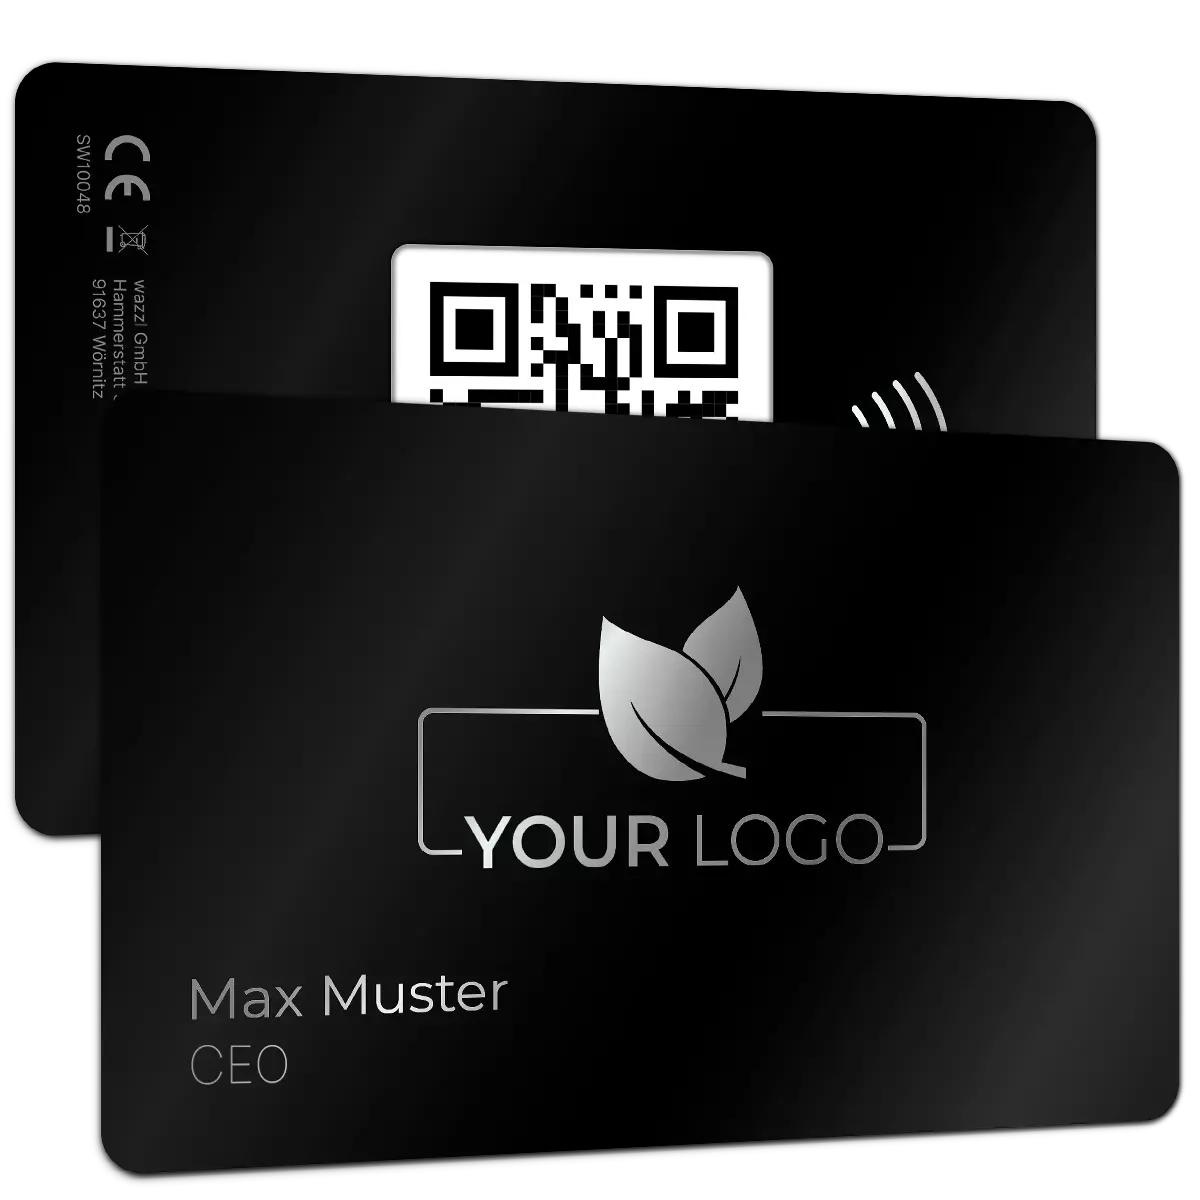 Custom metal card - Digital business card